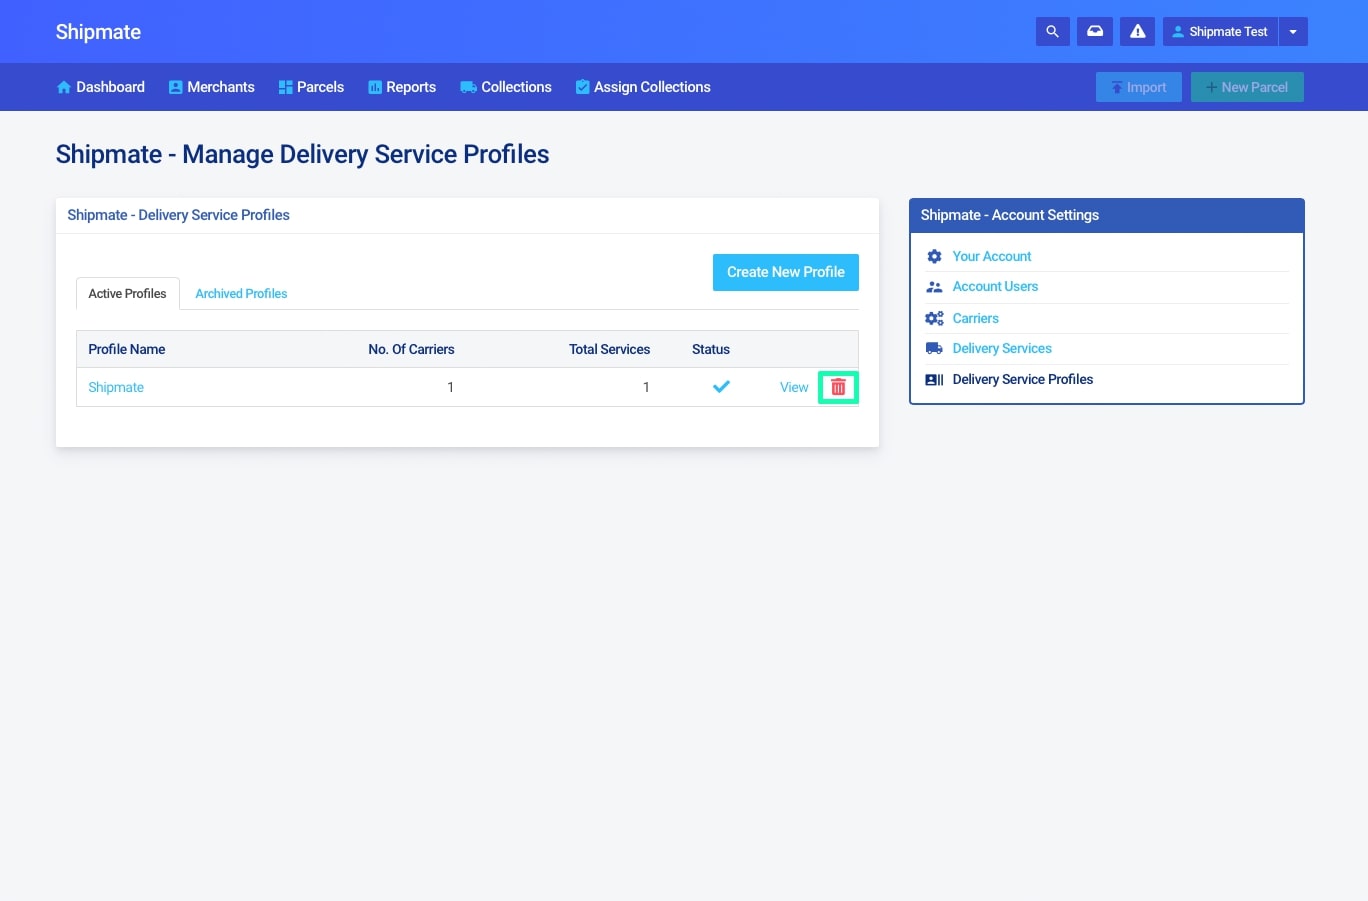 Shipmate - 3PL - Archive a Delivery Service Profile